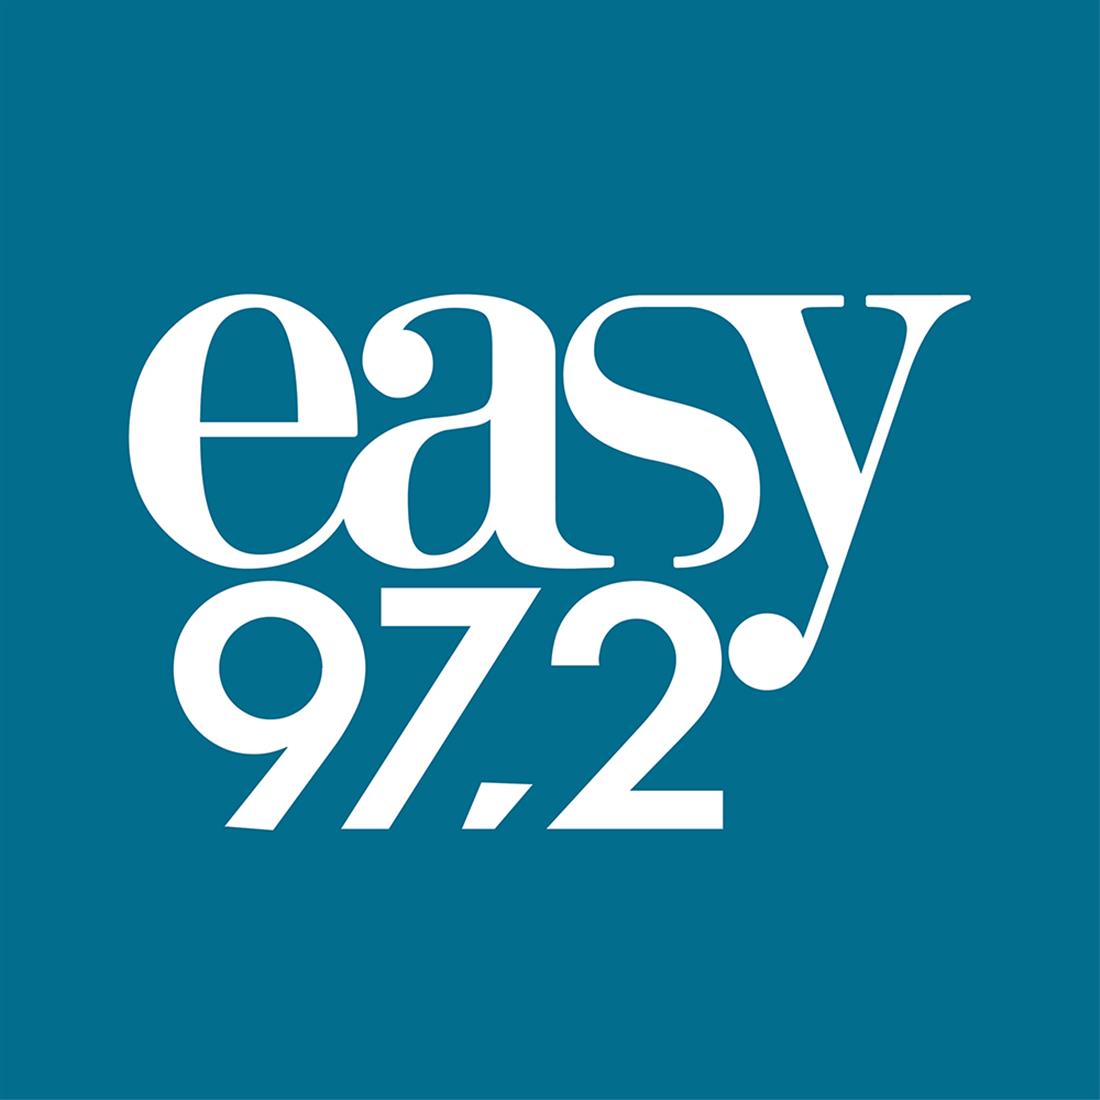 easy 97.2 - συναυλία - Madonna - Άμστερνταμ